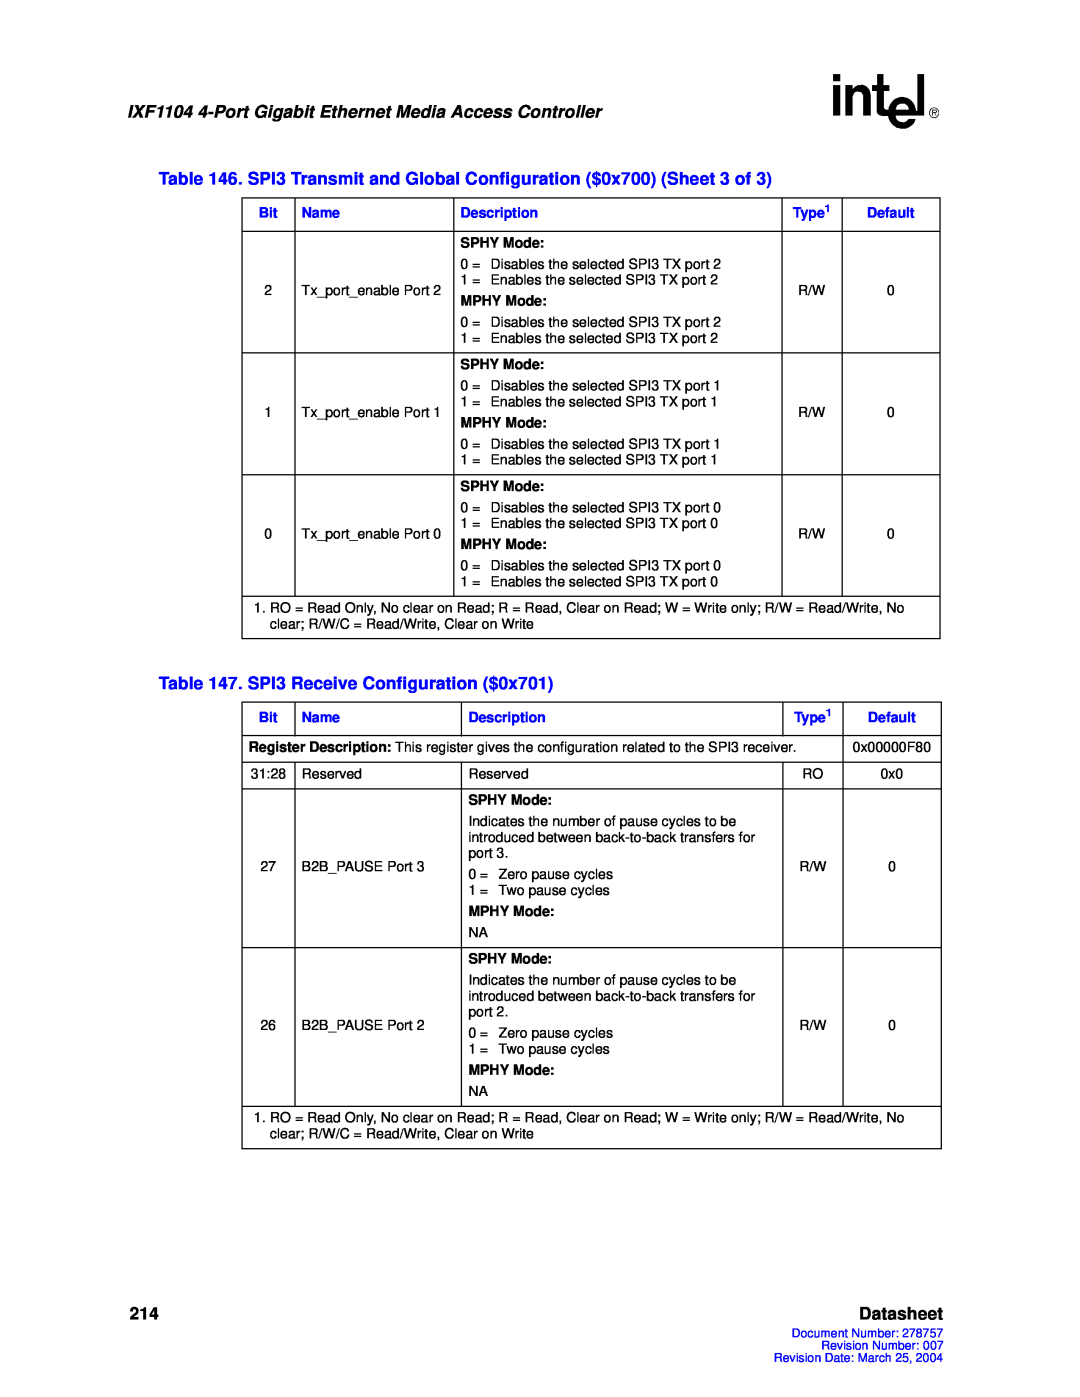 Intel IXF1104 manual Datasheet, SPHY Mode, MPHY Mode 